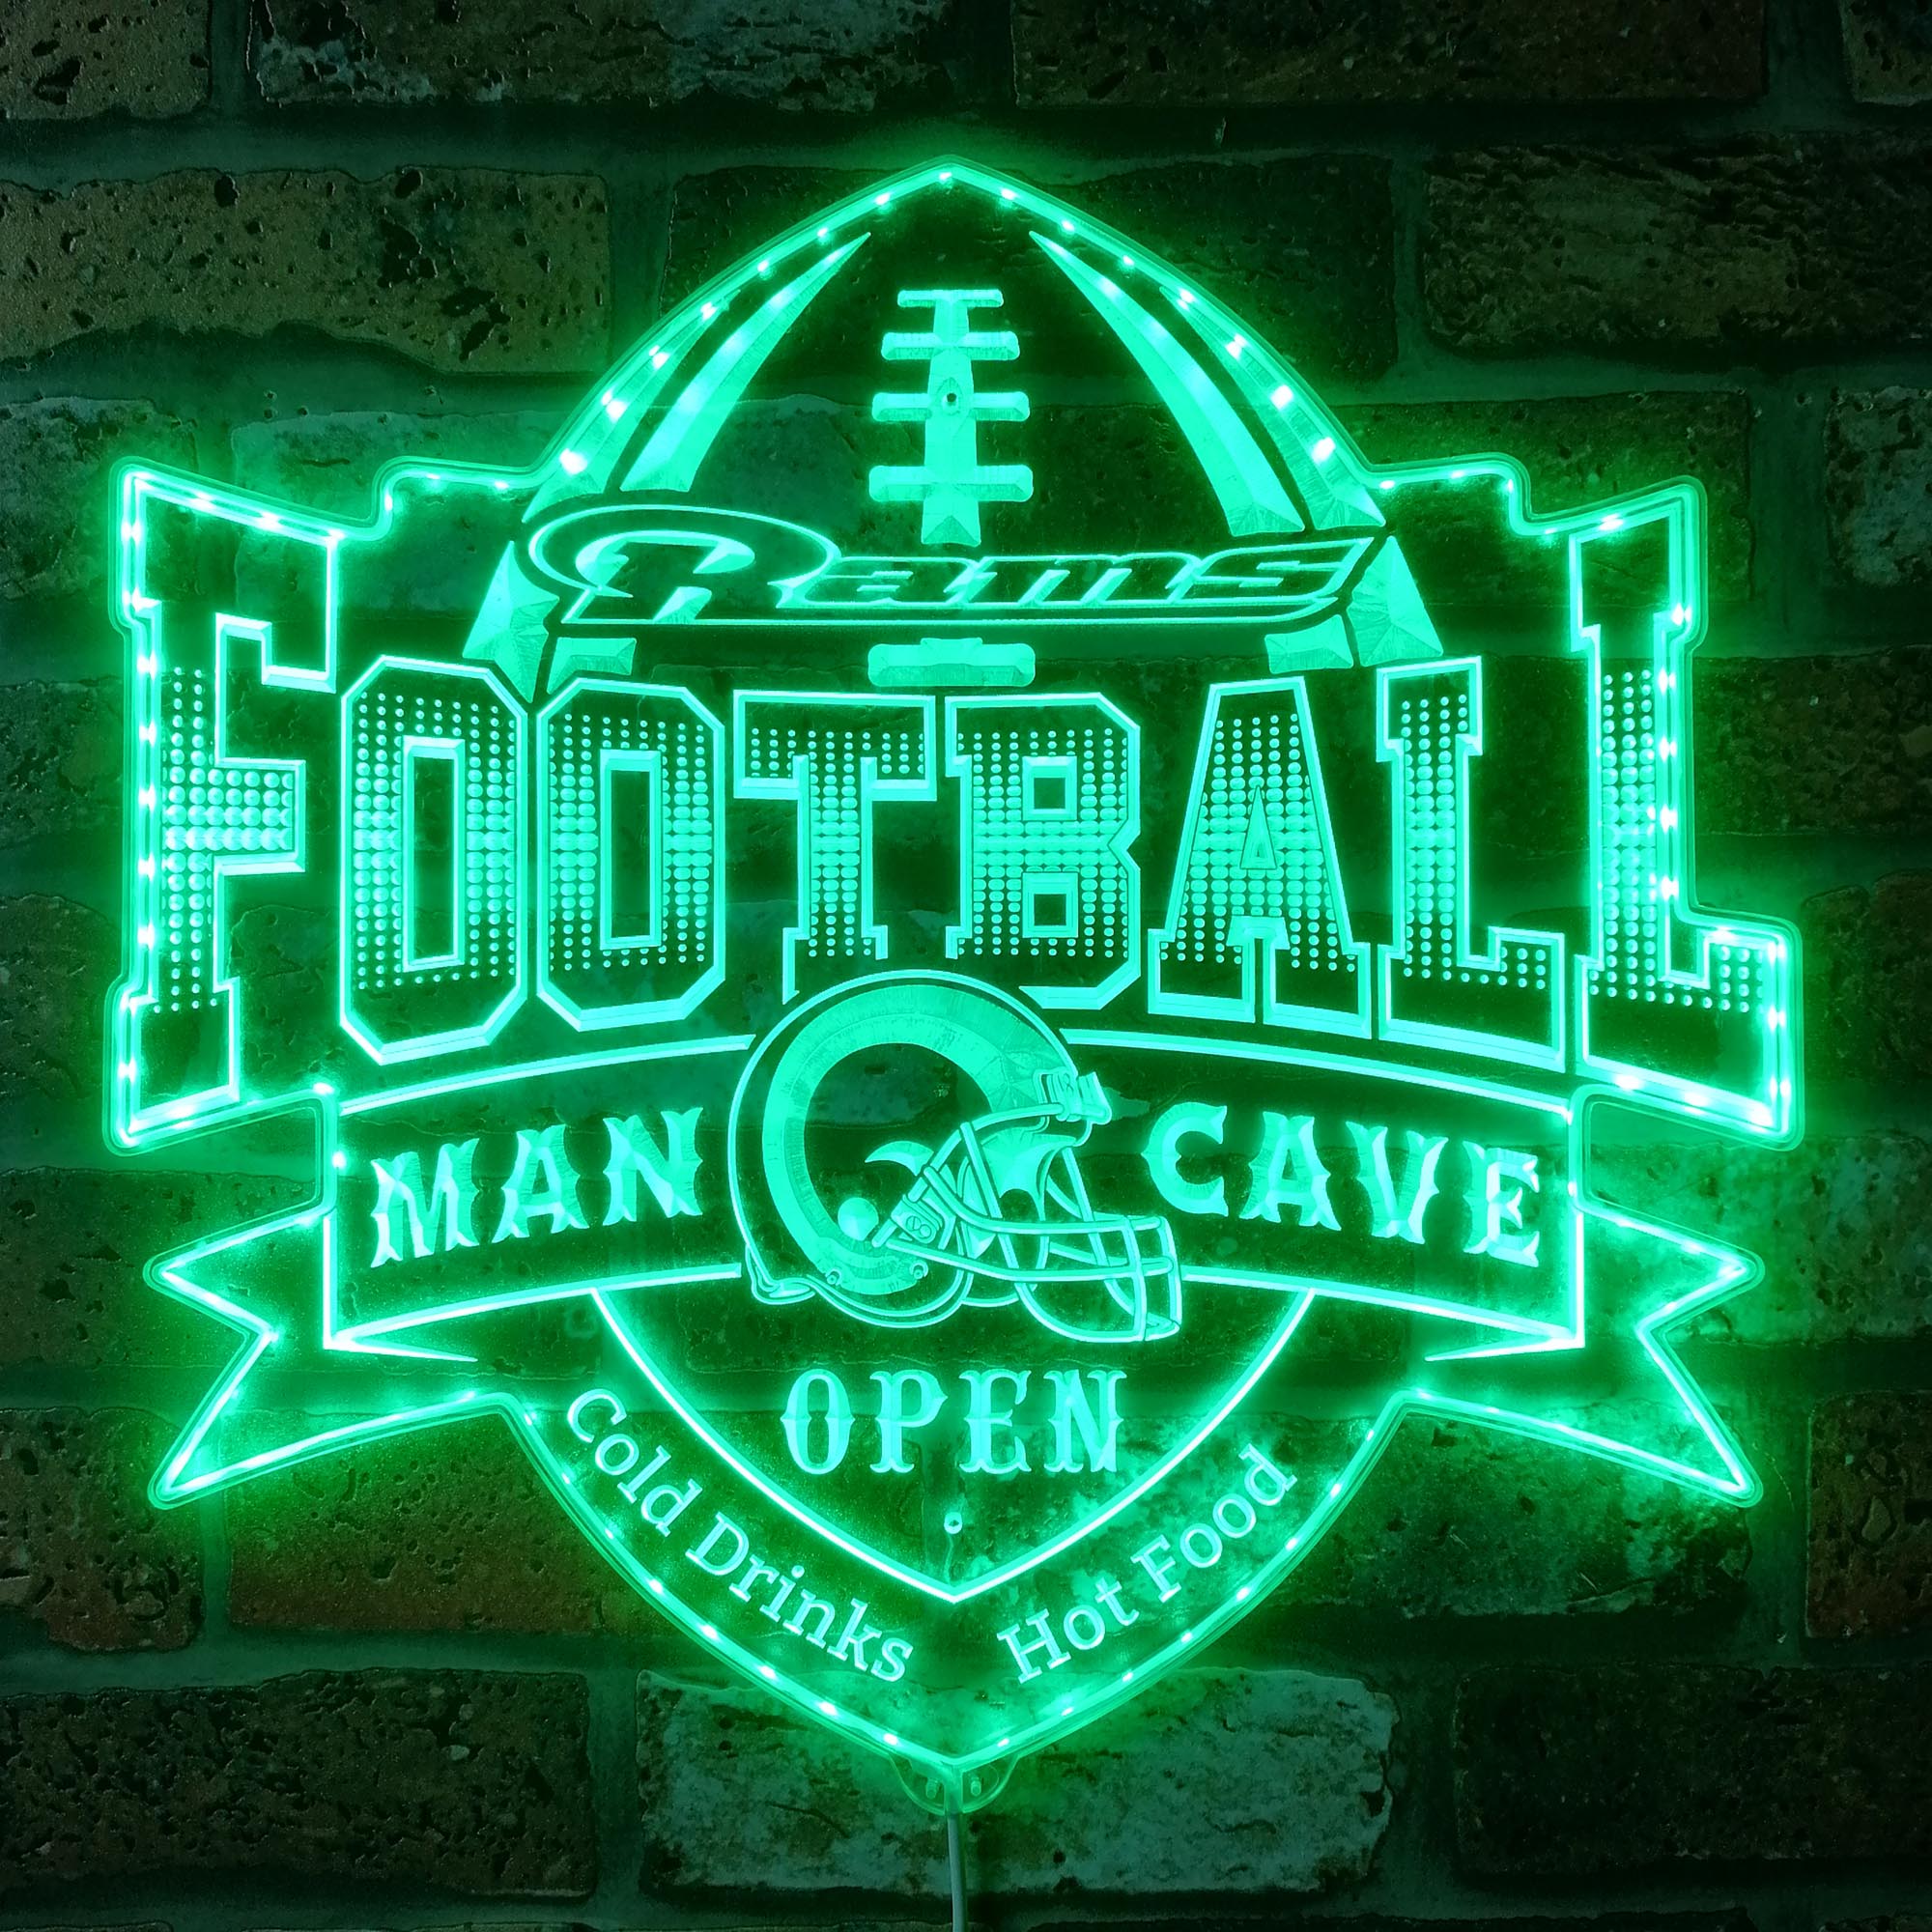 NFL Helmet St Louis Rams Football Dynamic RGB Edge Lit LED Sign